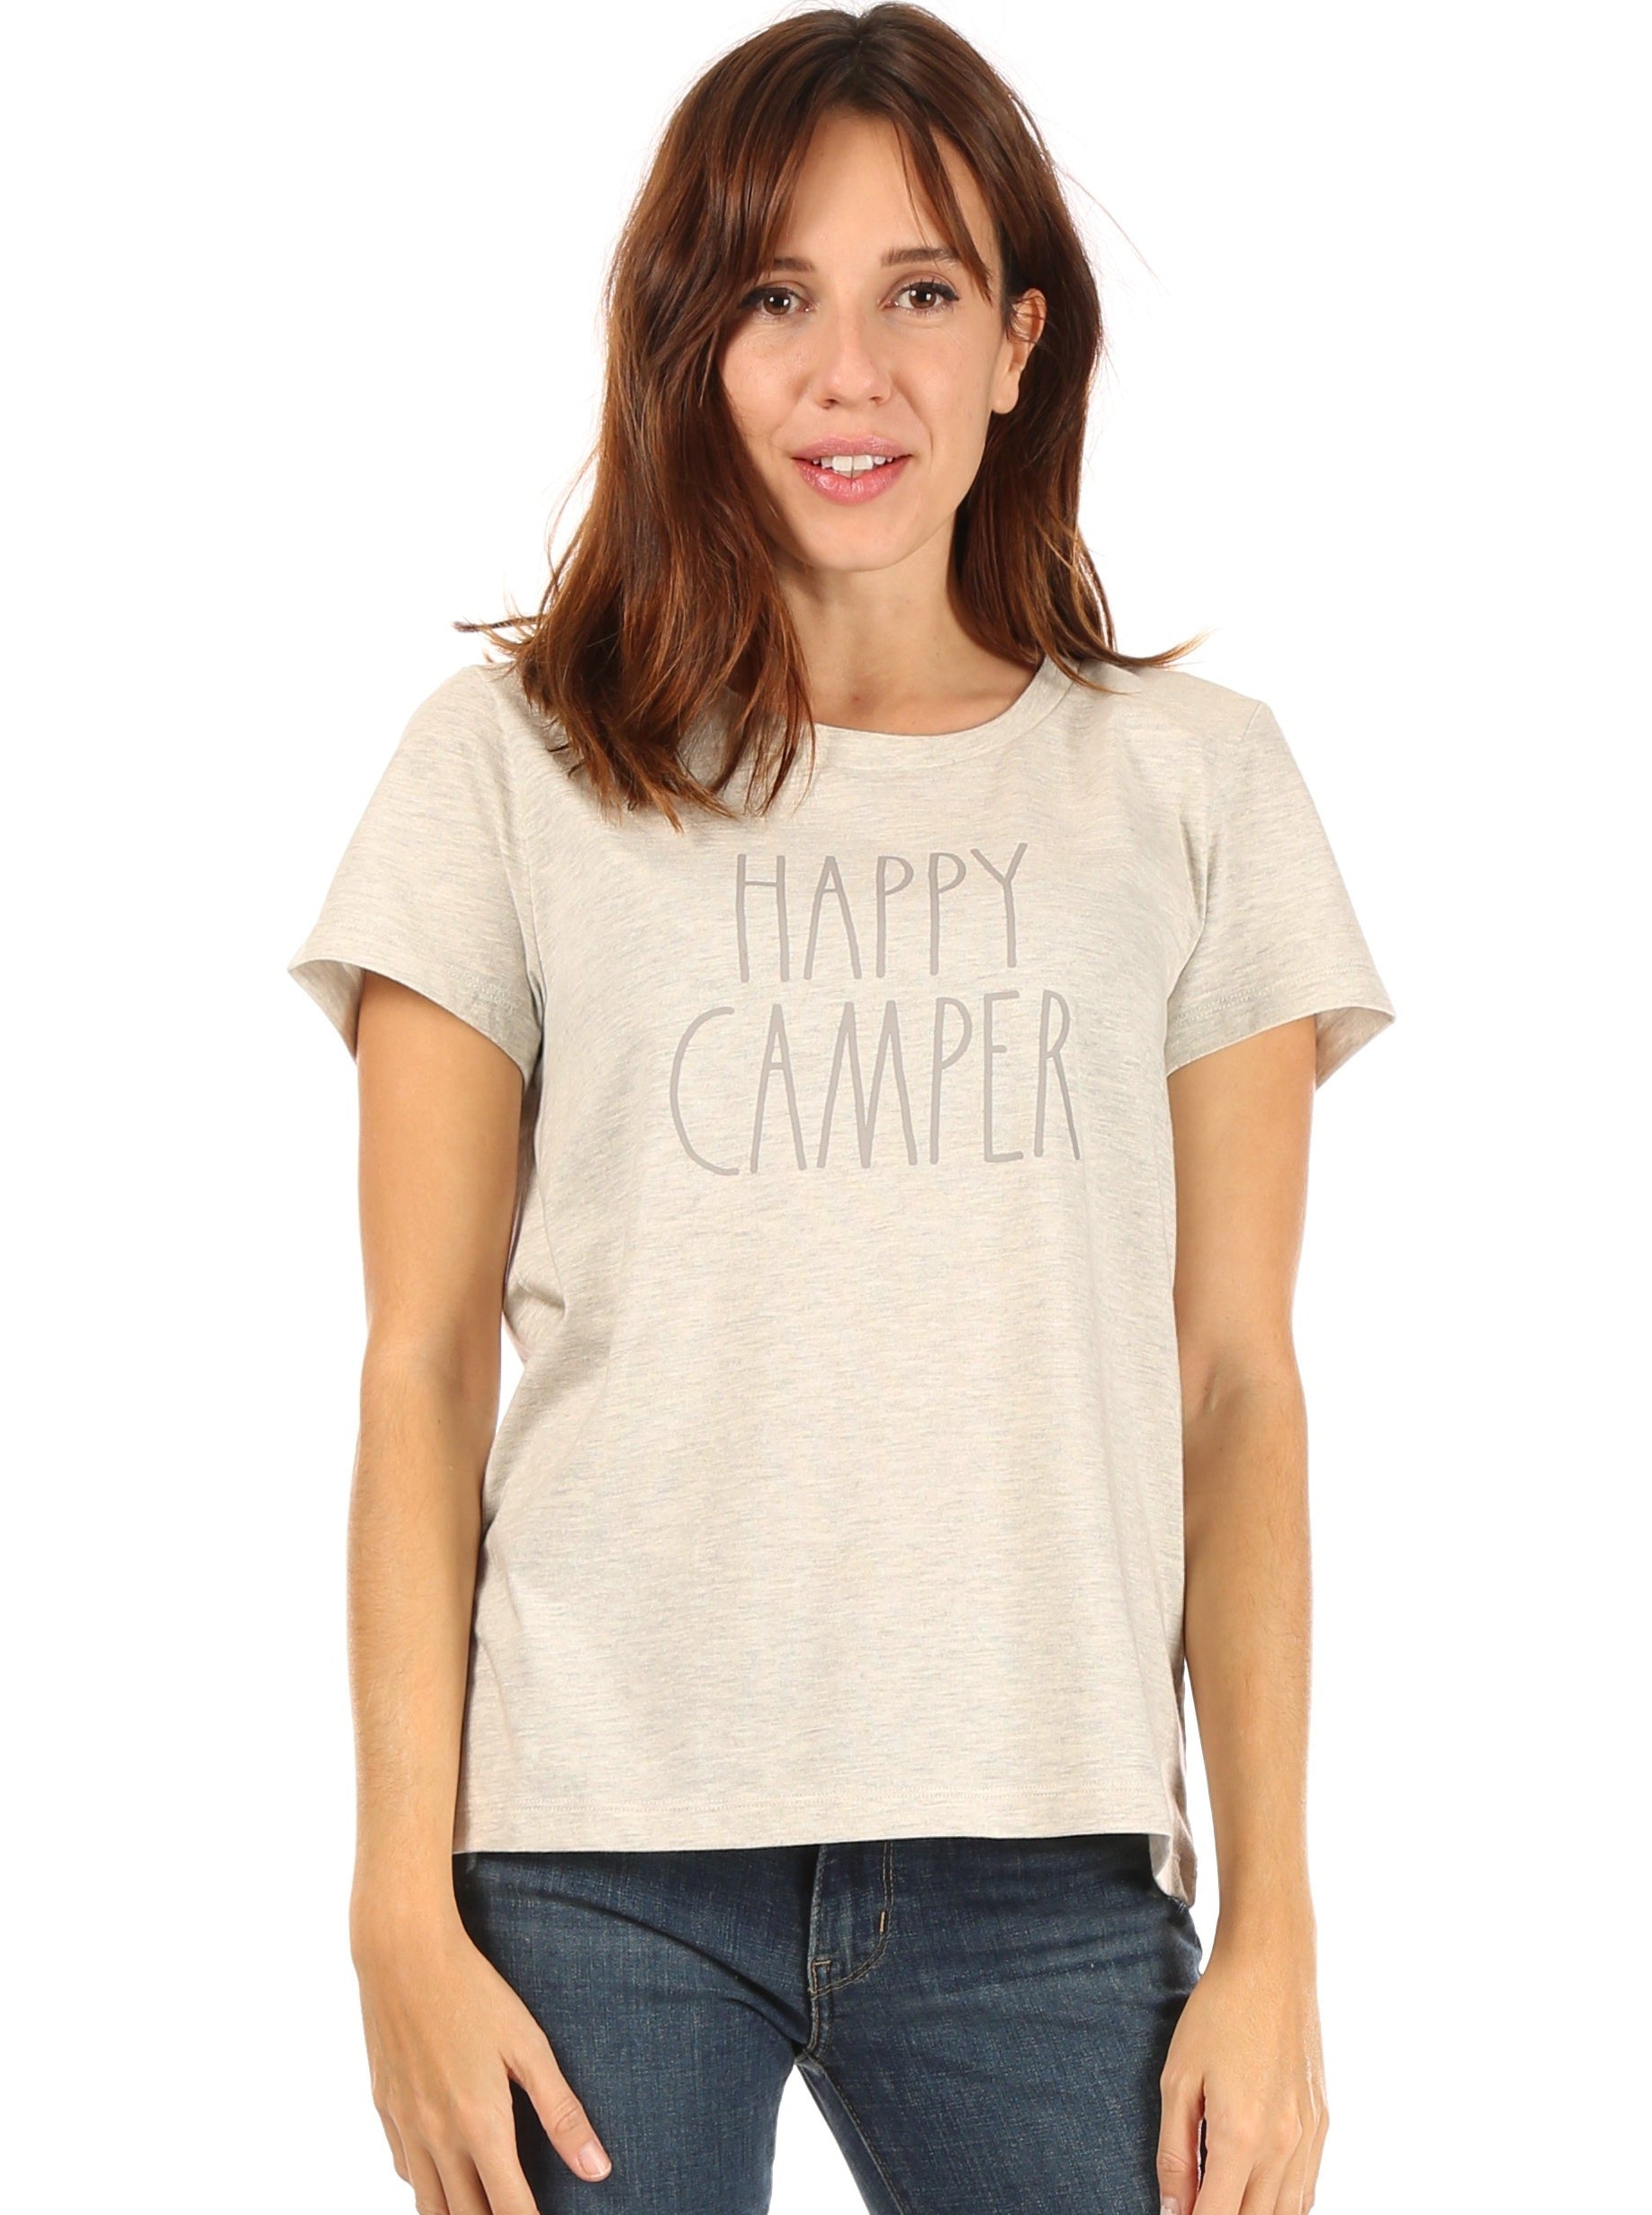 Women's "HAPPY CAMPER" Short Sleeve Icon T-Shirt - Rae Dunn Wear - W T-Shirt